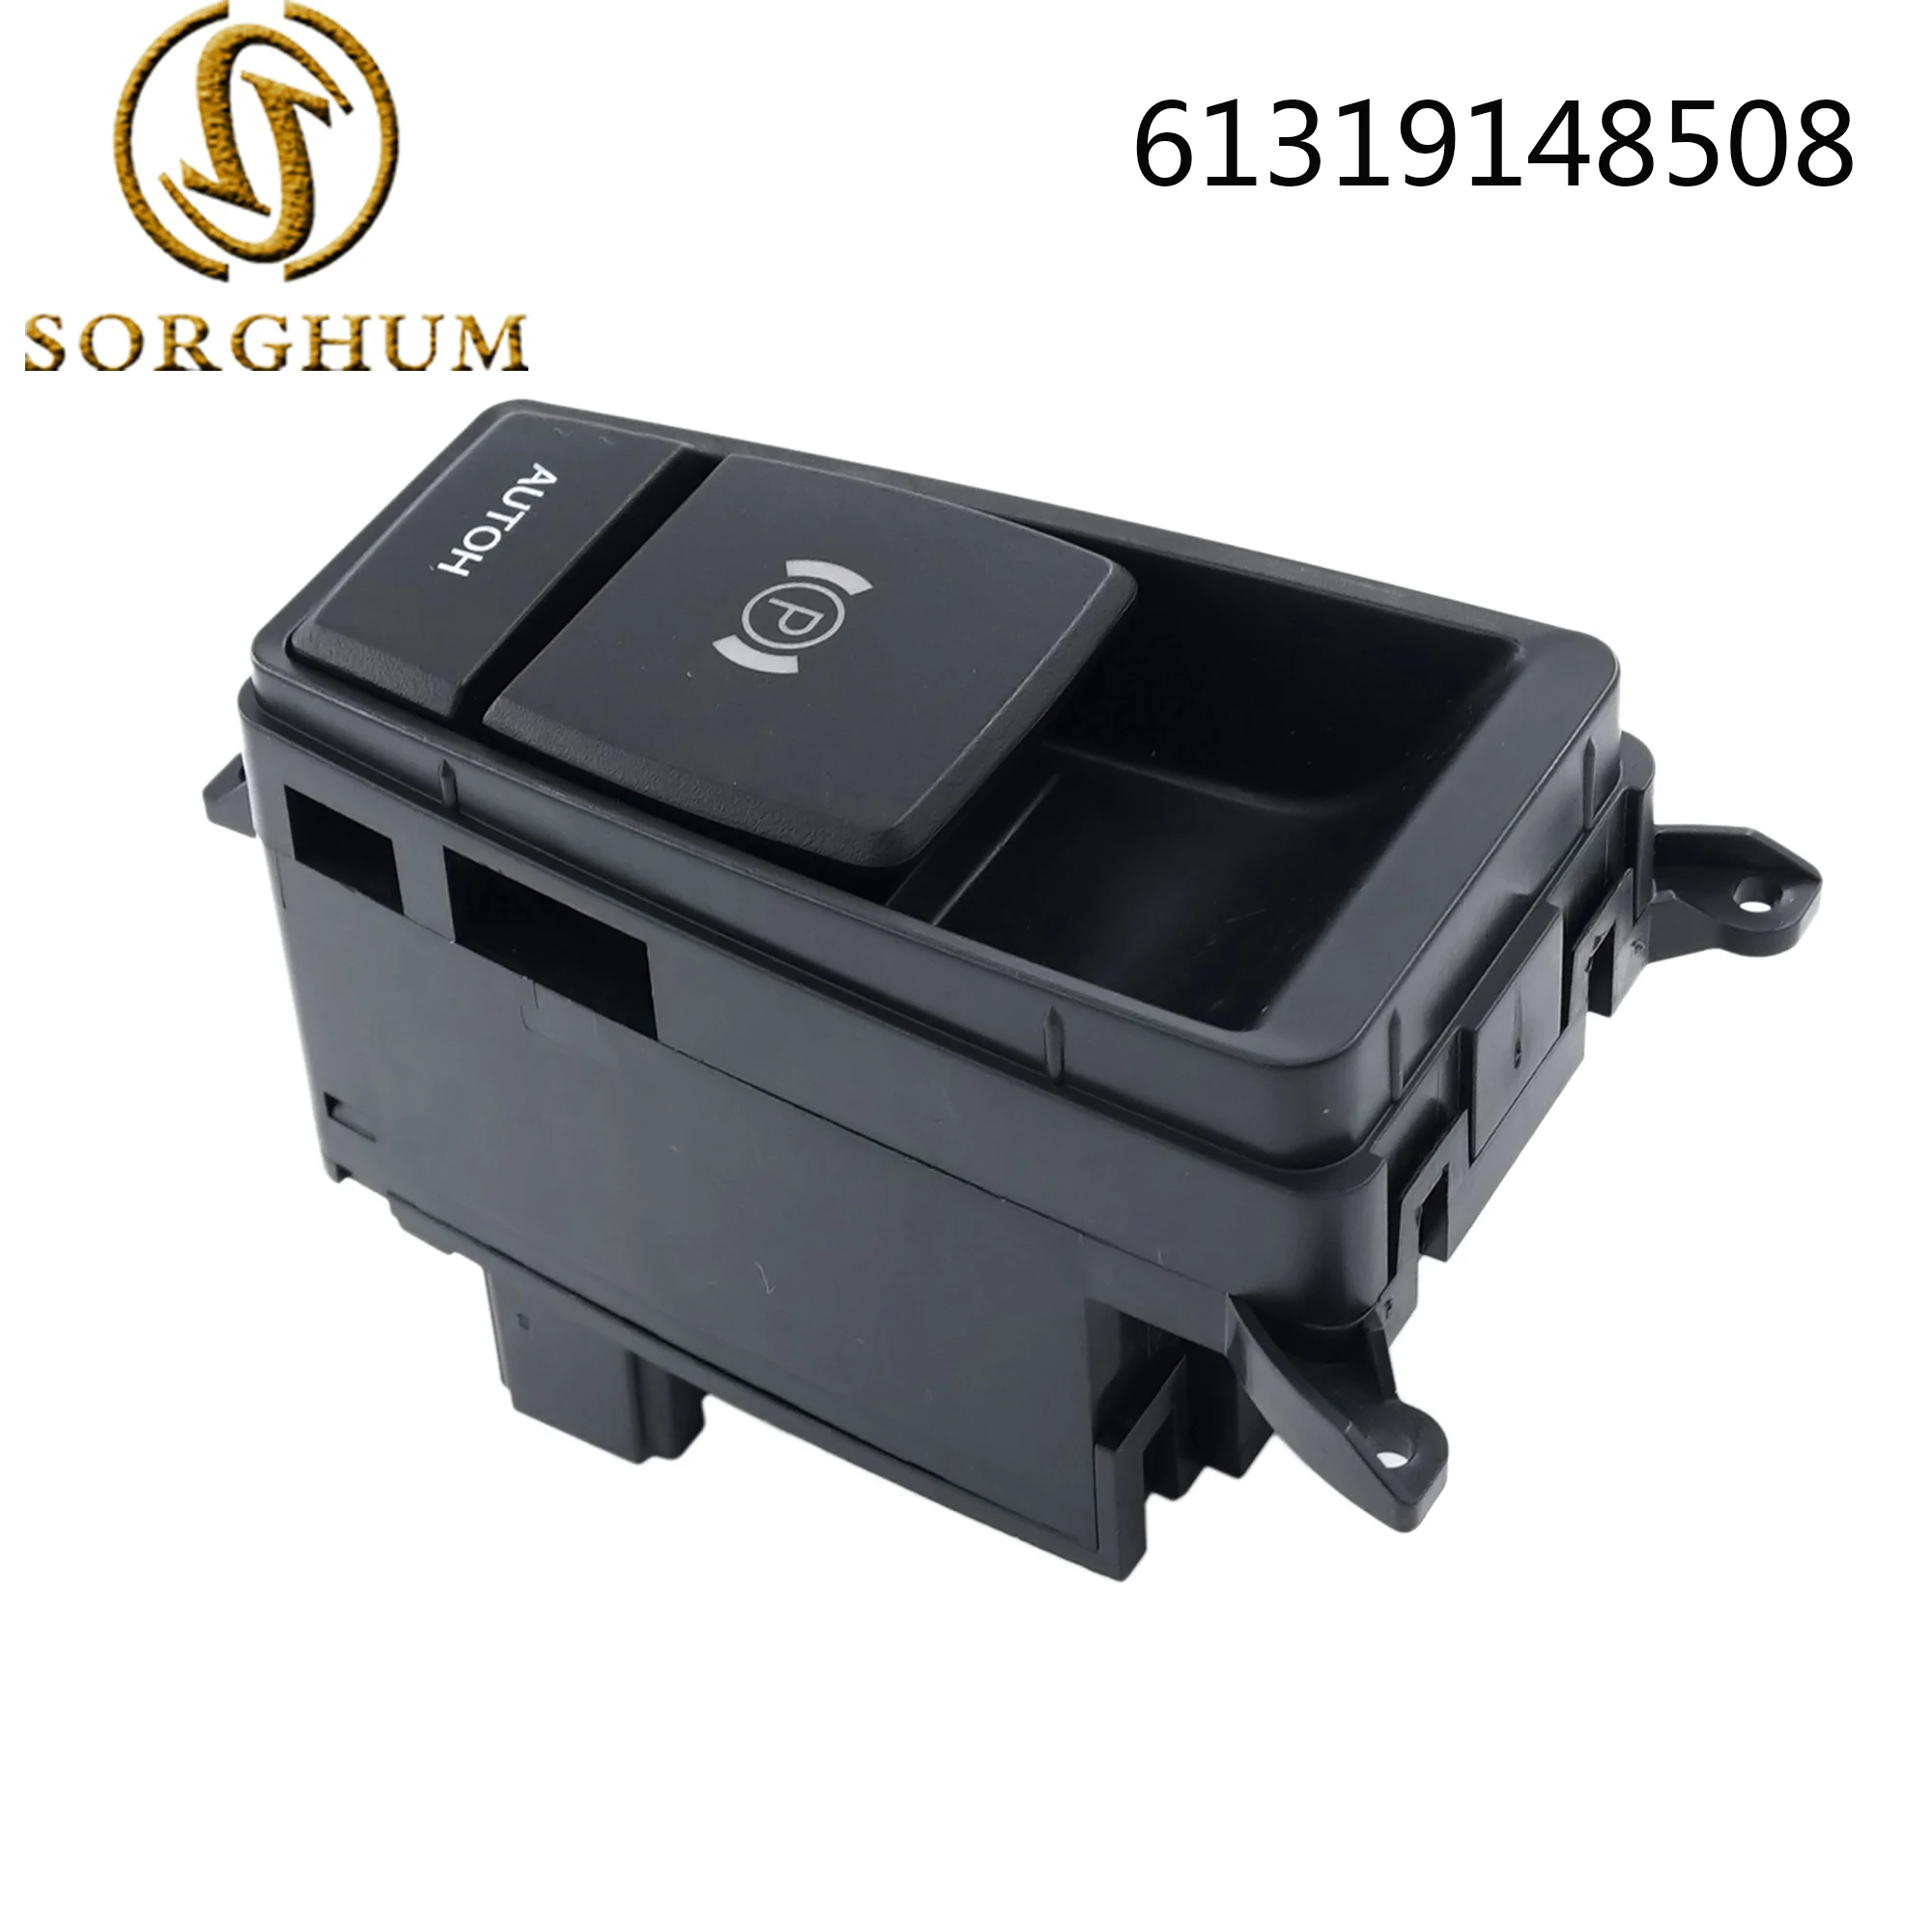 

Sorghum NEW Electric Parking Brake Control Switch Auto H Hold 61319148508 613 191 485 08 For BMW E70 X5 E71 E72 X6 2006-2013